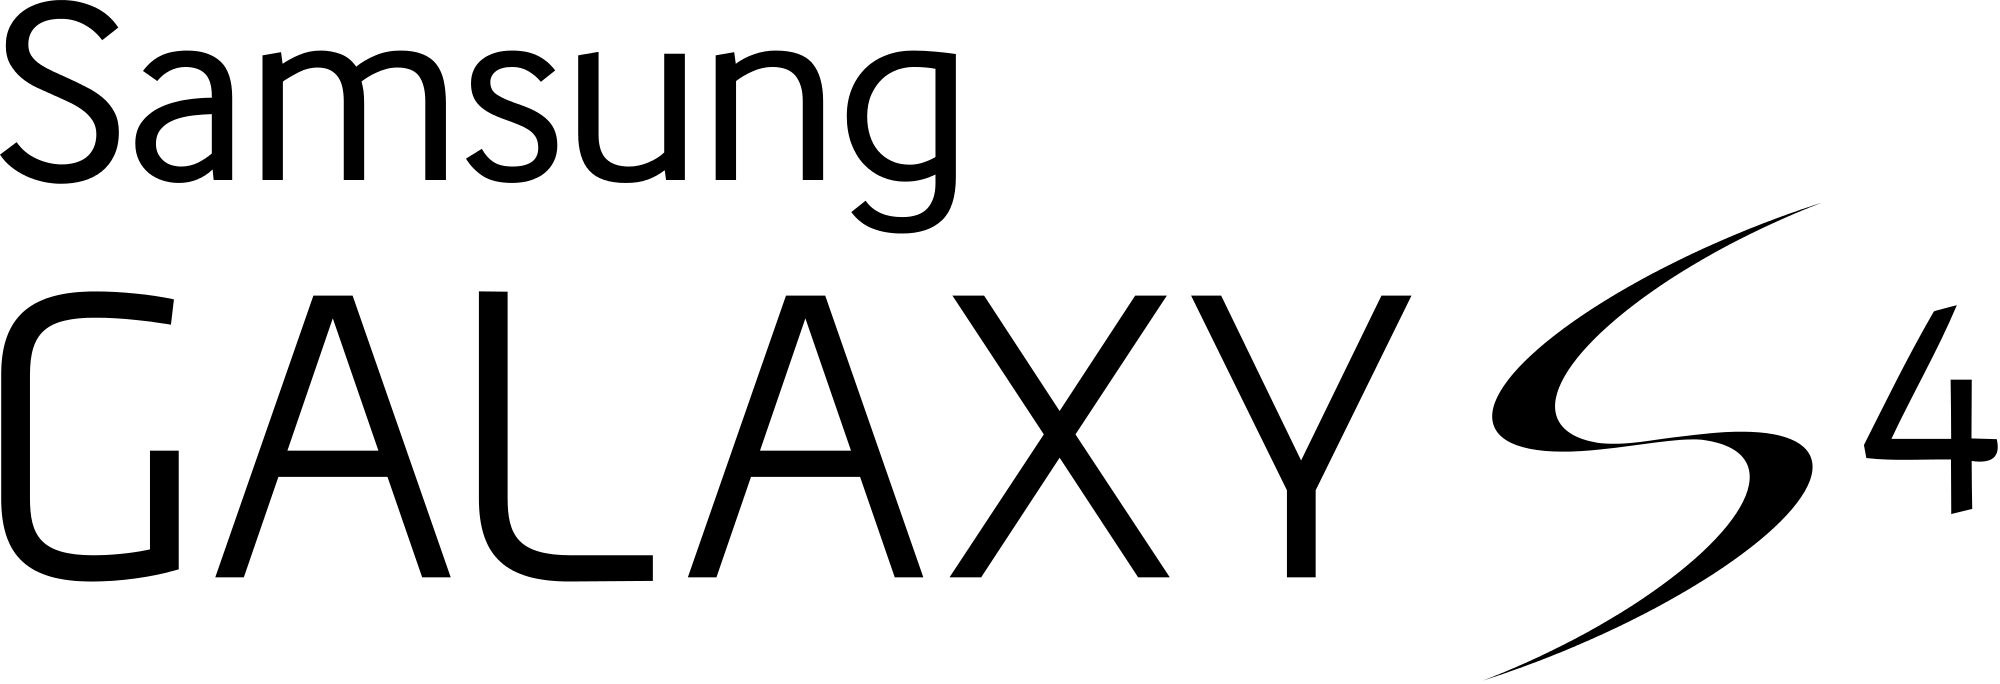 Samsung Galaxy S4 Logo - File:Samsung Galaxy S4 logo.svg - Wikimedia Commons